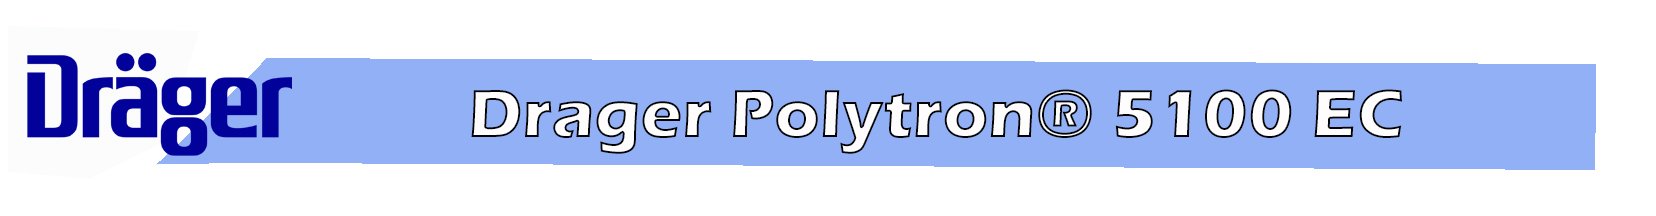 Dräger Polytron® 5100 EC - detectionsafe